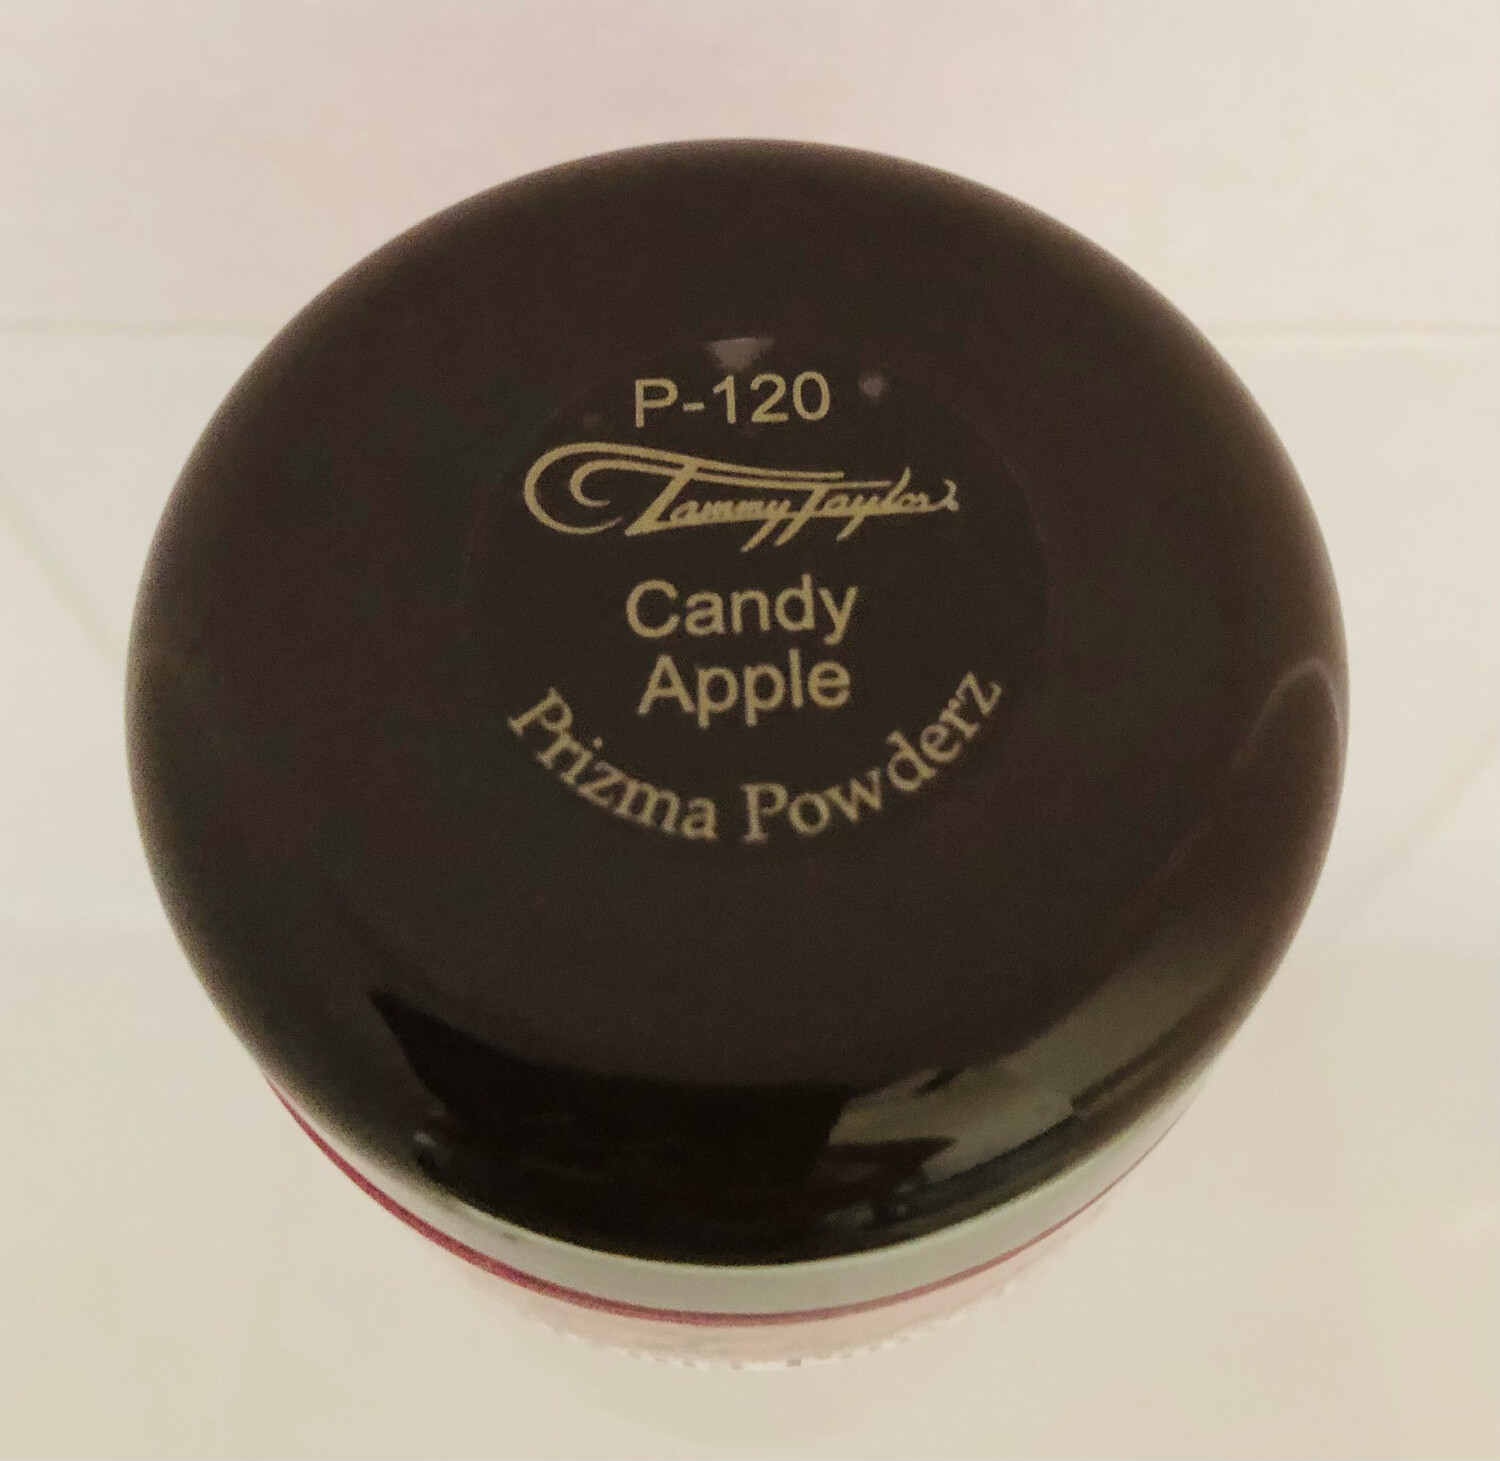 TT Prizma Candy Apple 1.5oz P-120